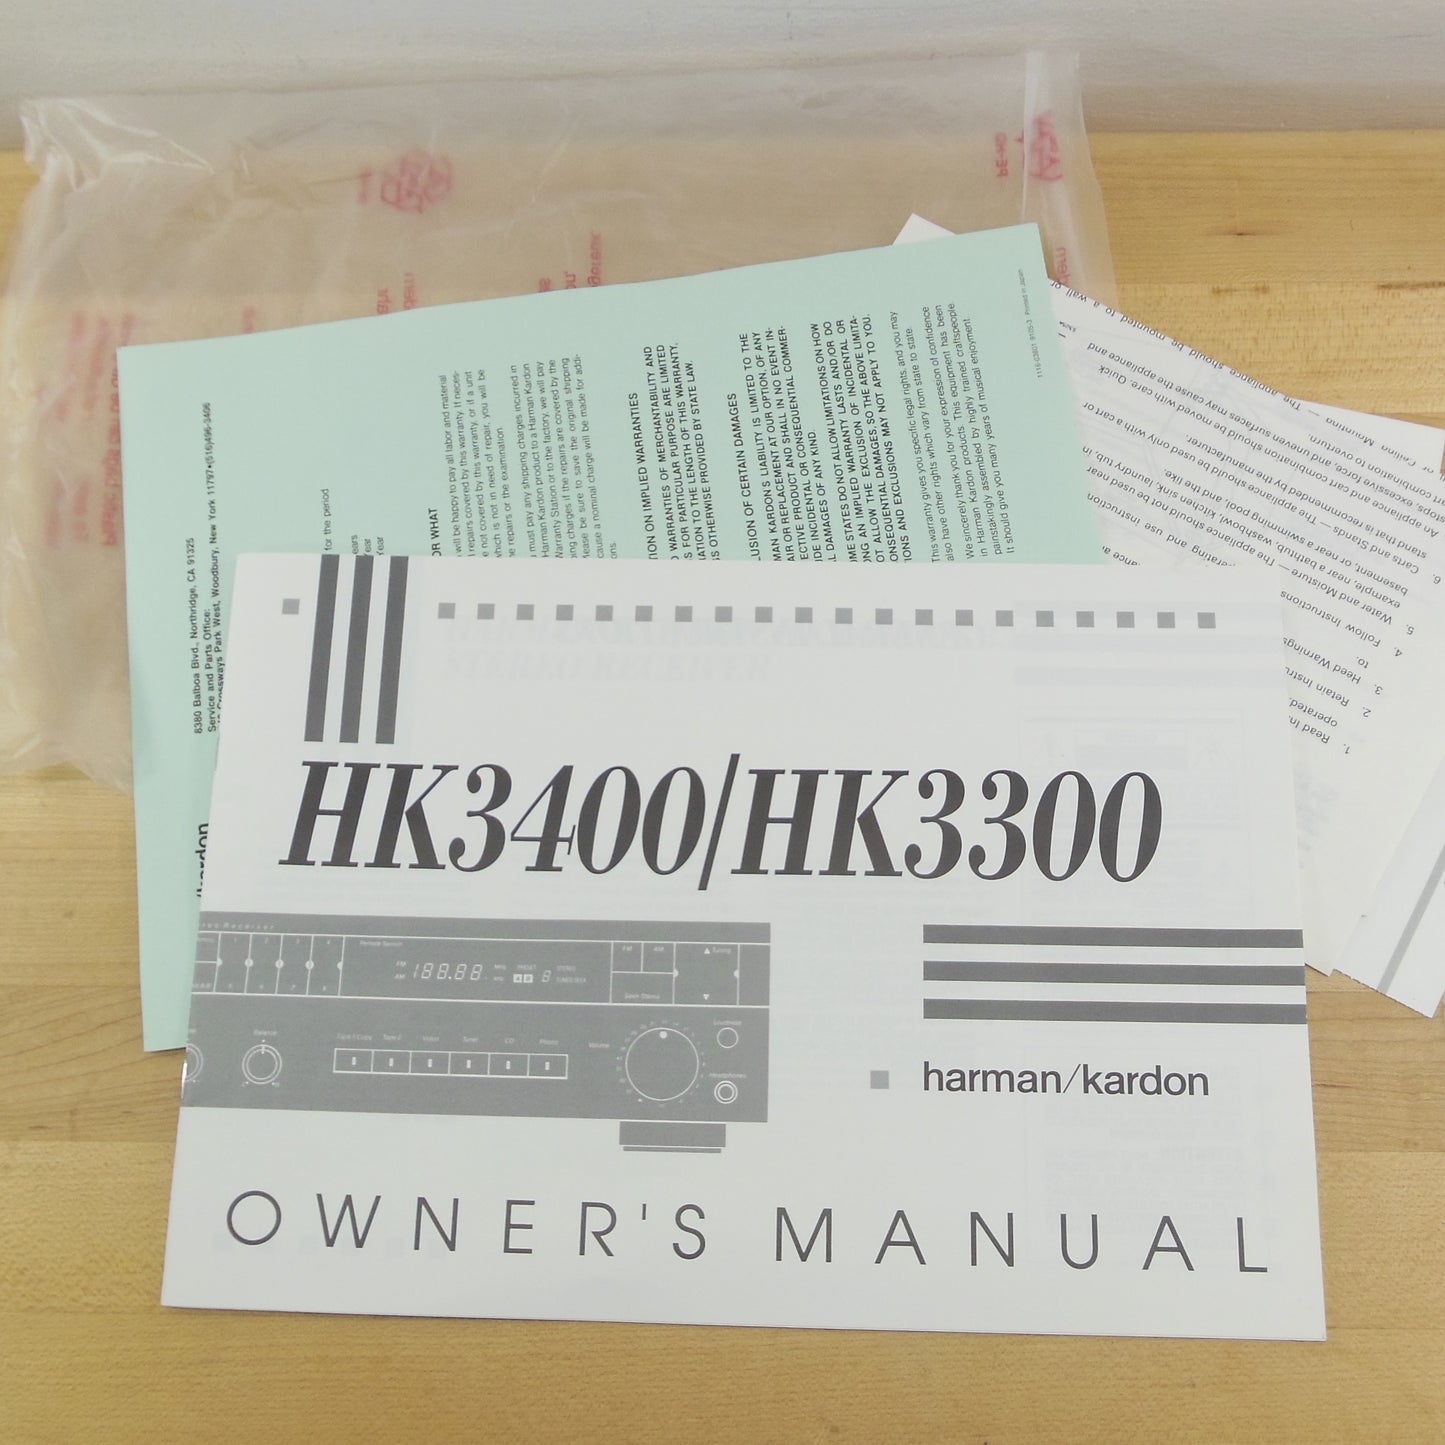 Harman Kardon HK3400 HK3300 Receiver Owner's Manual Papers.